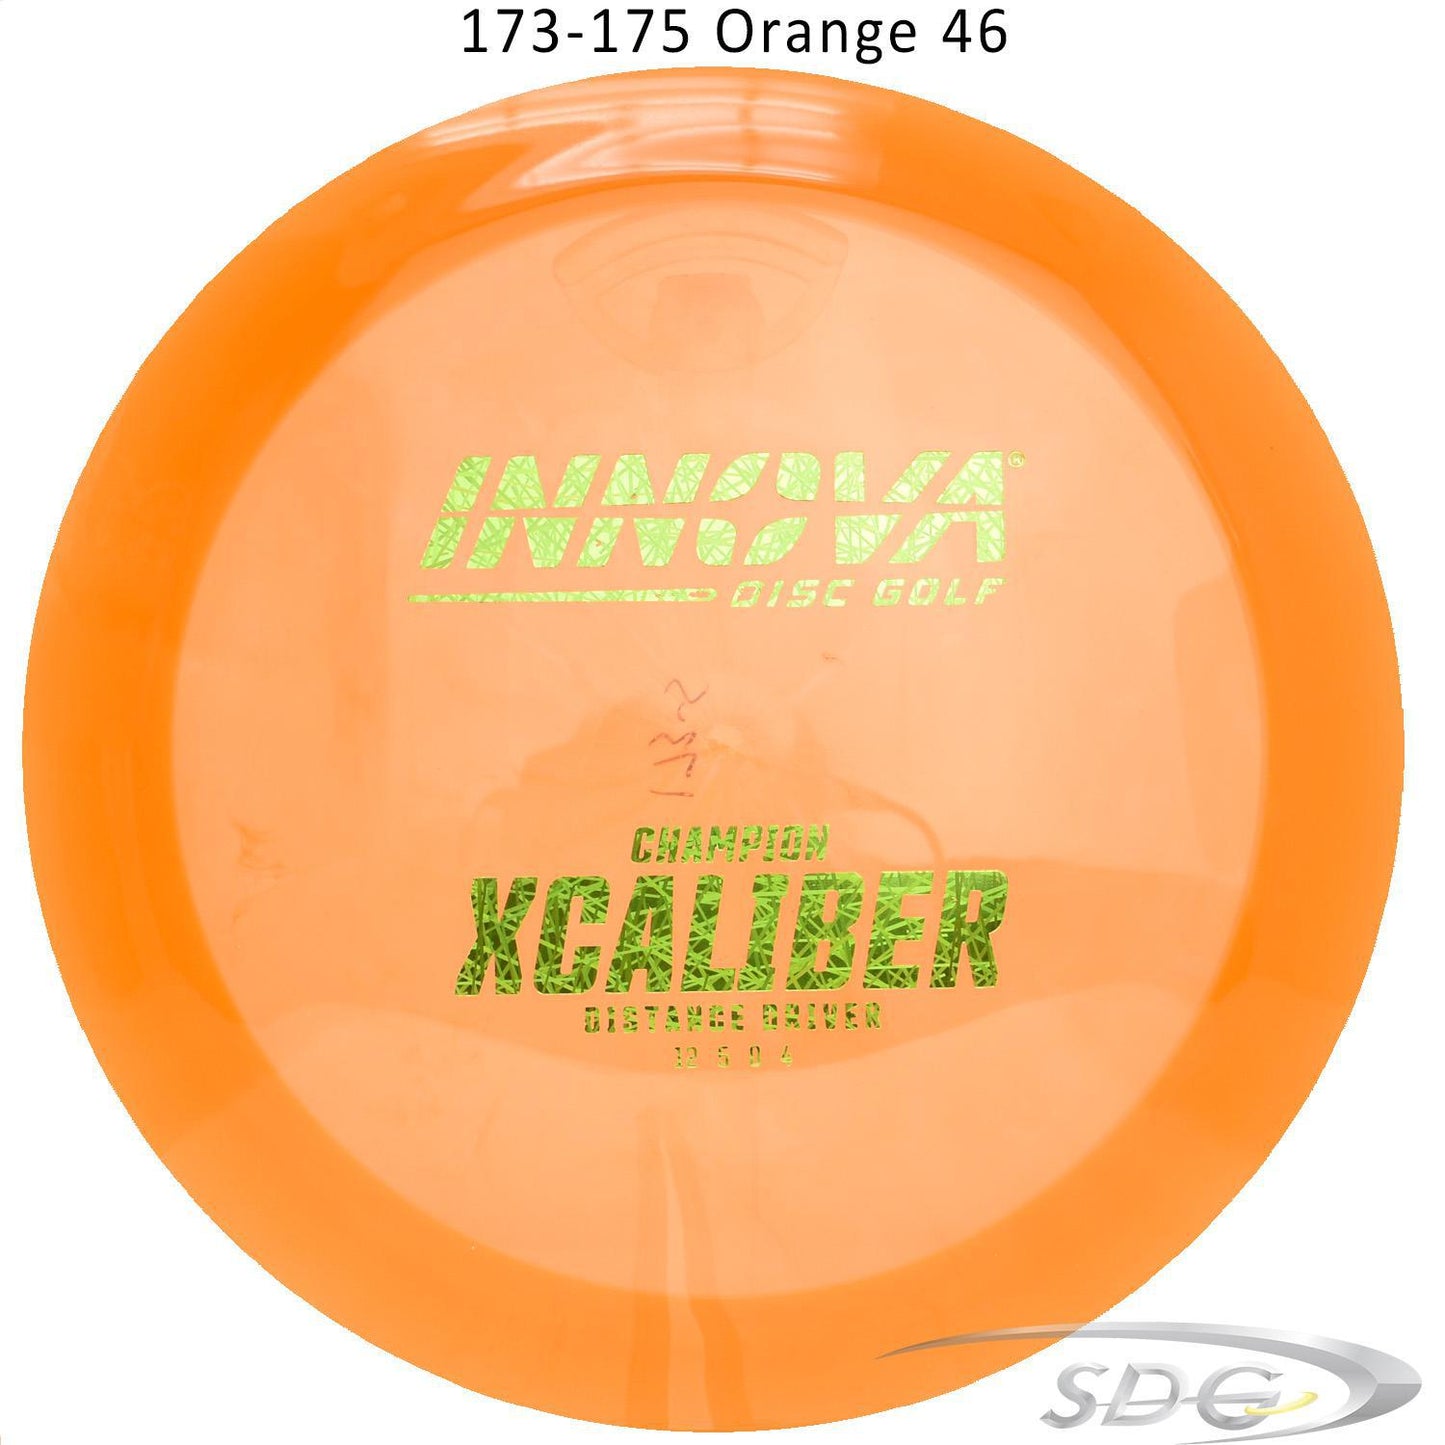 innova-champion-xcaliber-disc-golf-distance-driver 173-175 Orange 46 